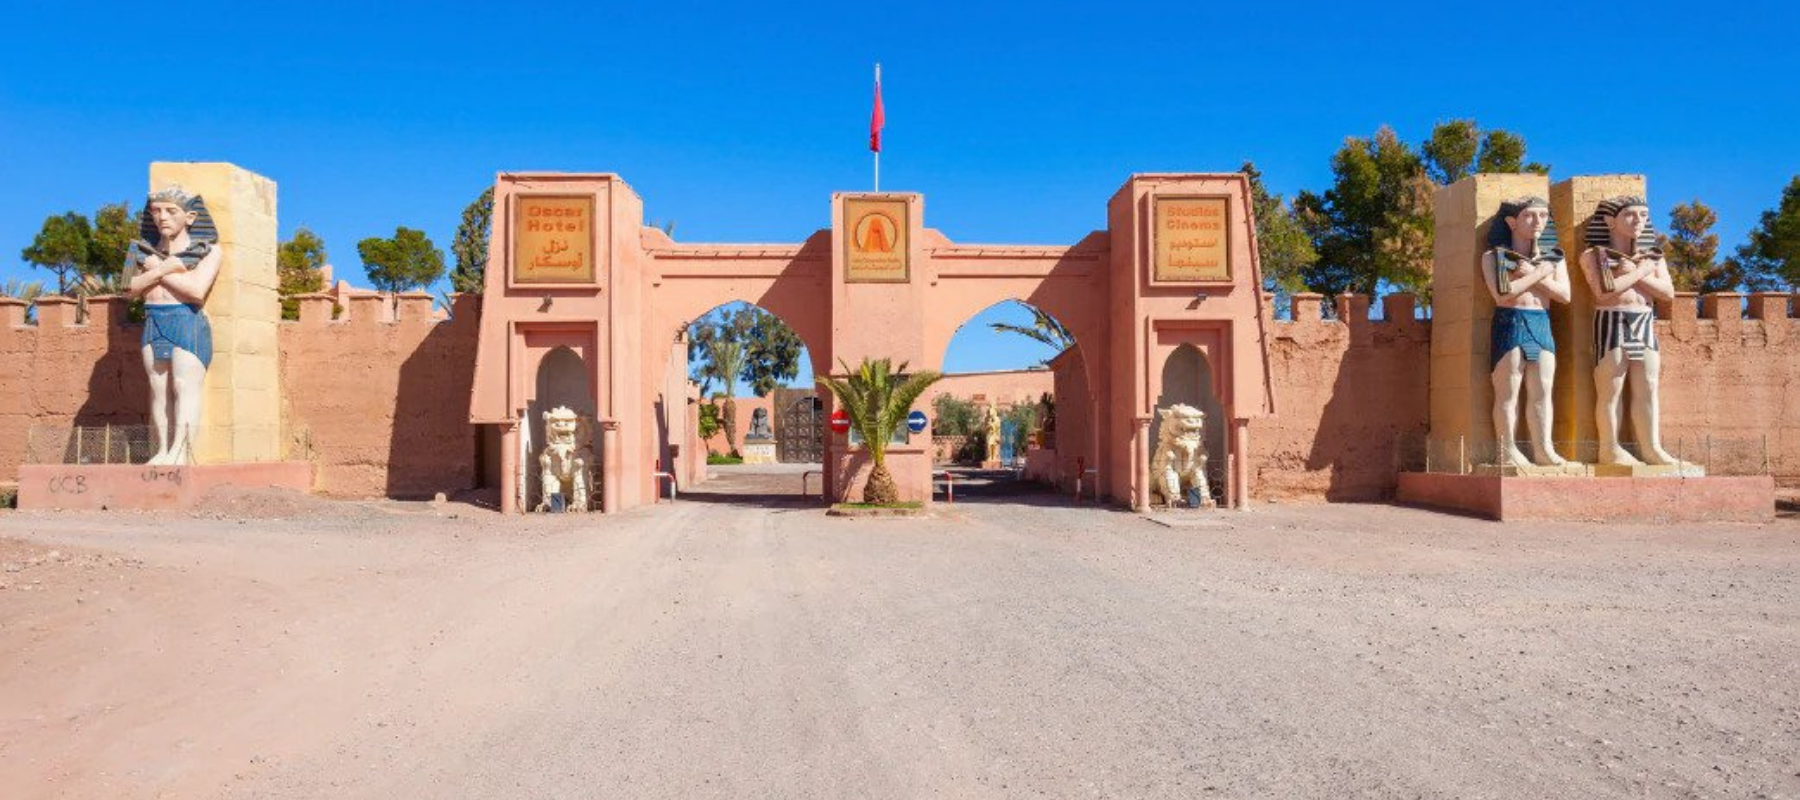 Film studios in Ouarzazate